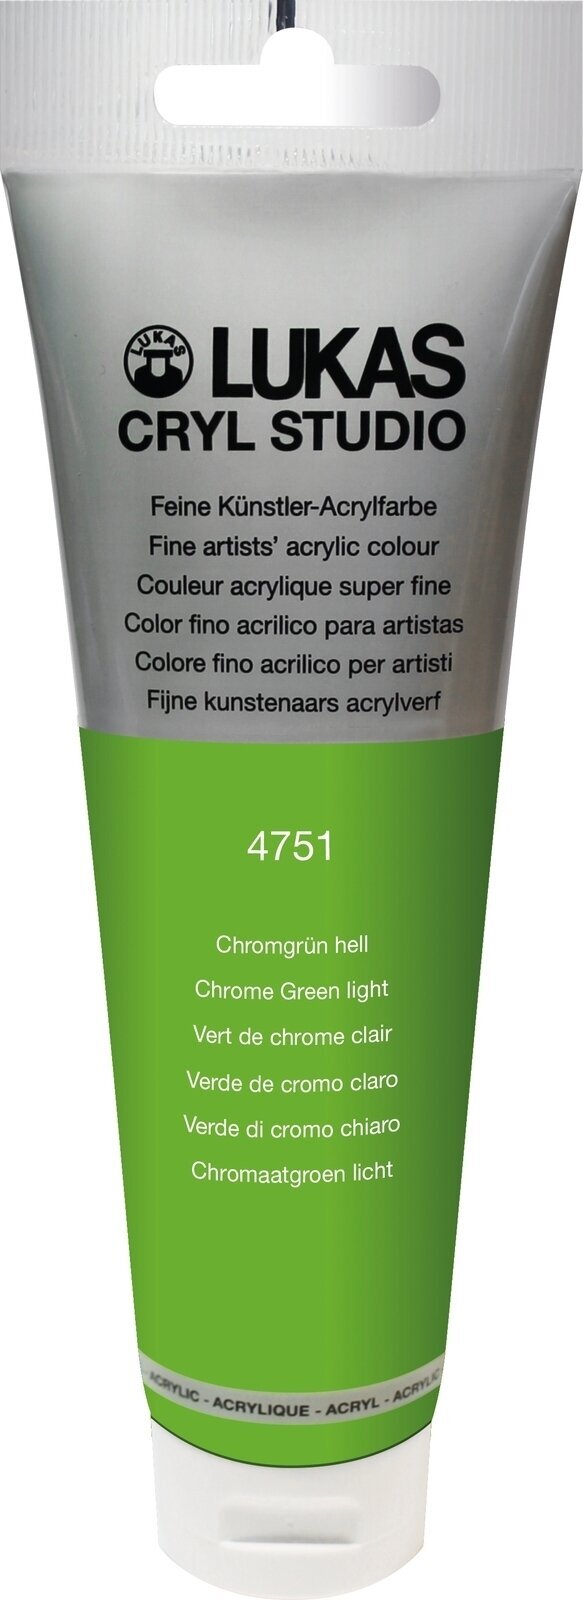 Peinture acrylique Lukas Cryl Studio Peinture acrylique 125 ml Chrome Green Light